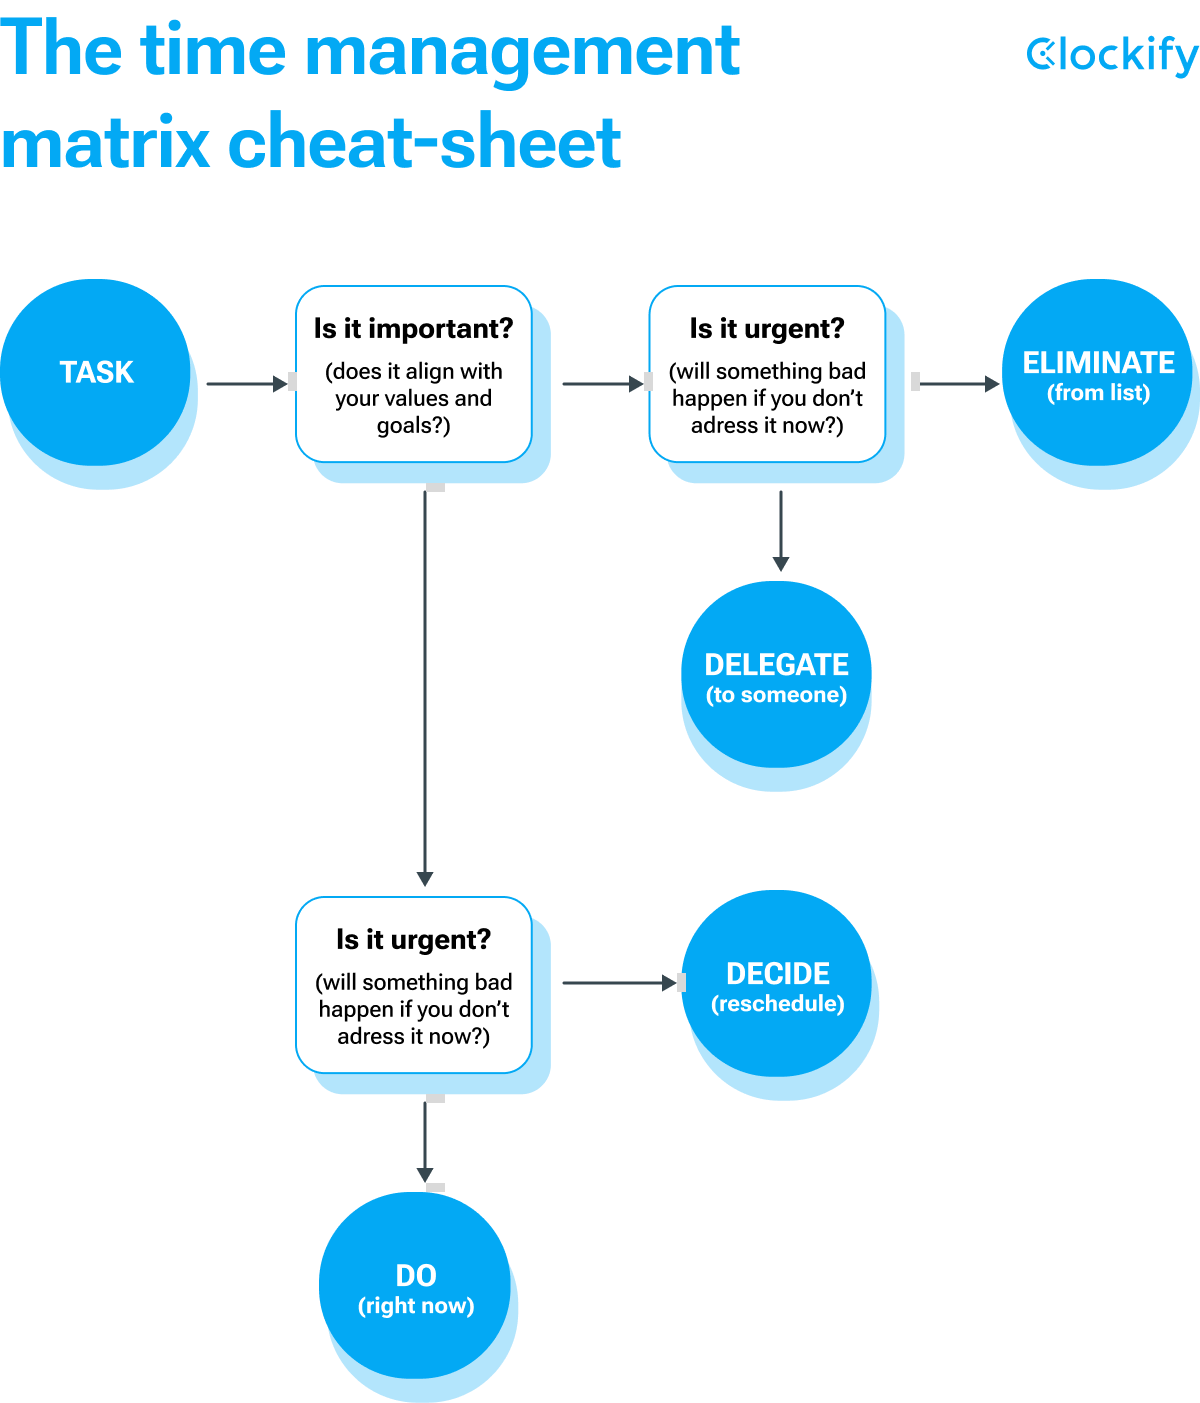 The time management matrix cheat-sheet